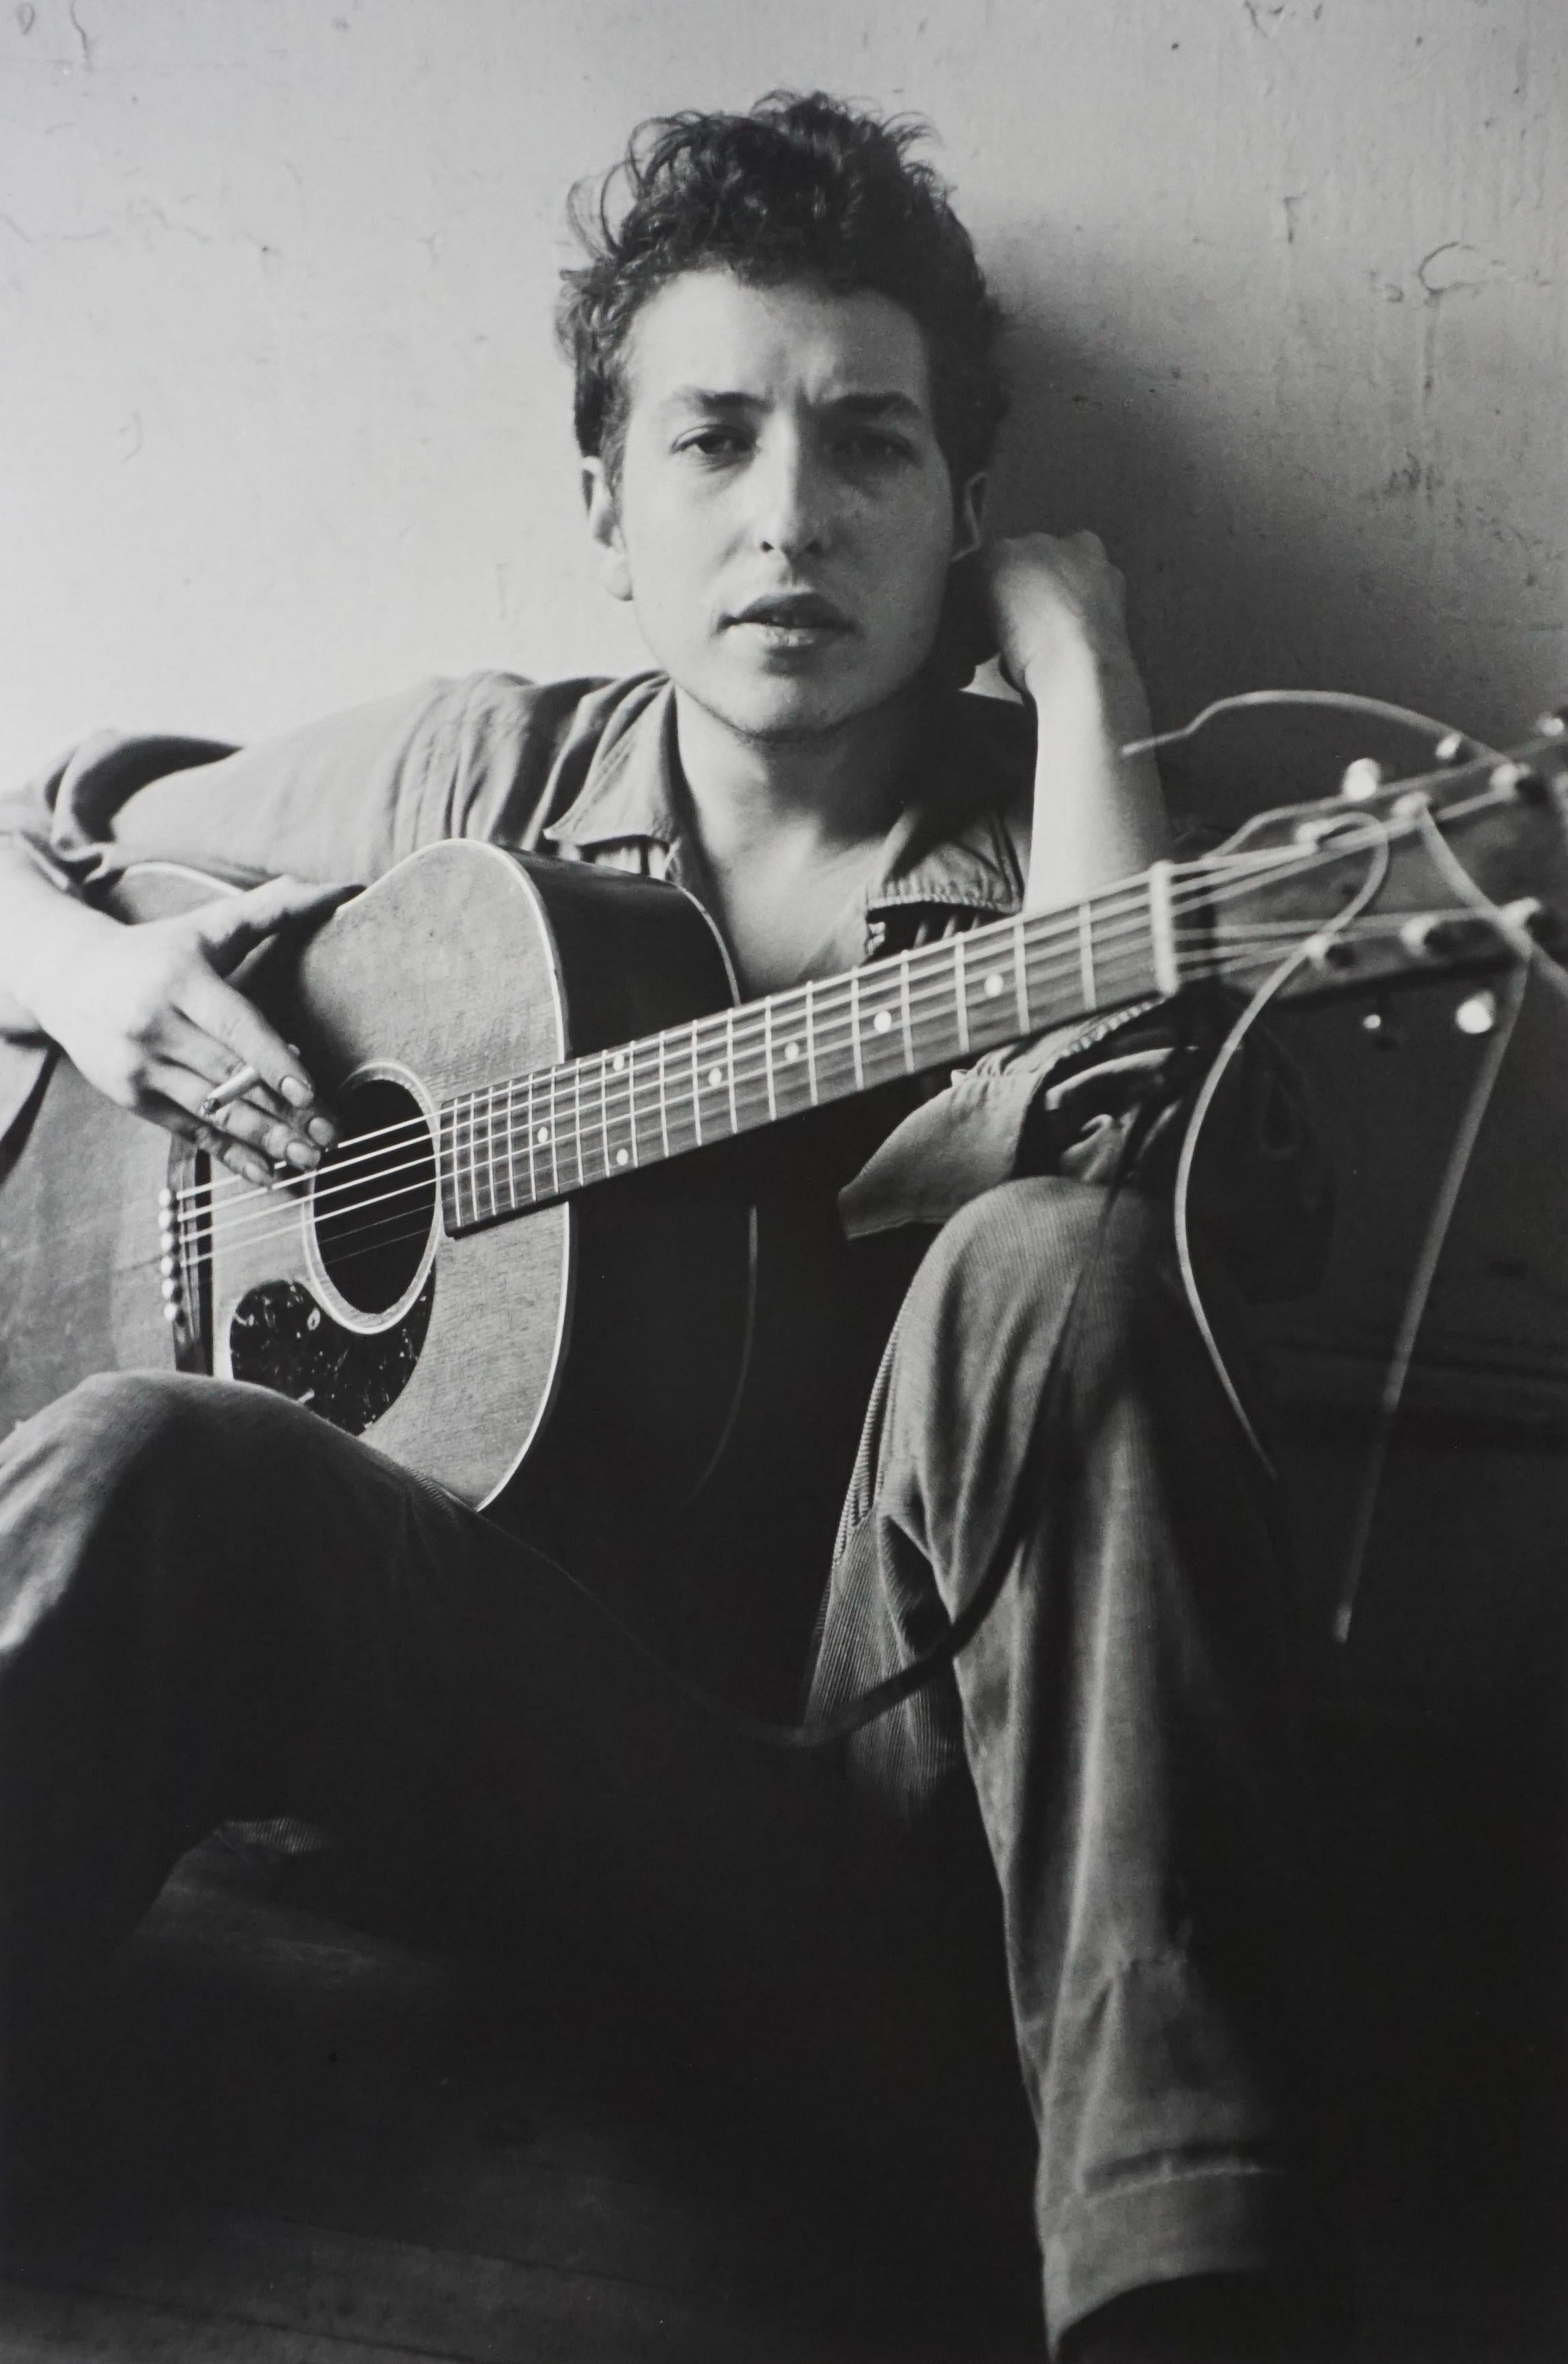 John Cohen Black and White Photograph - Bob Dylan in My Loft, 1962 (printed 2013)